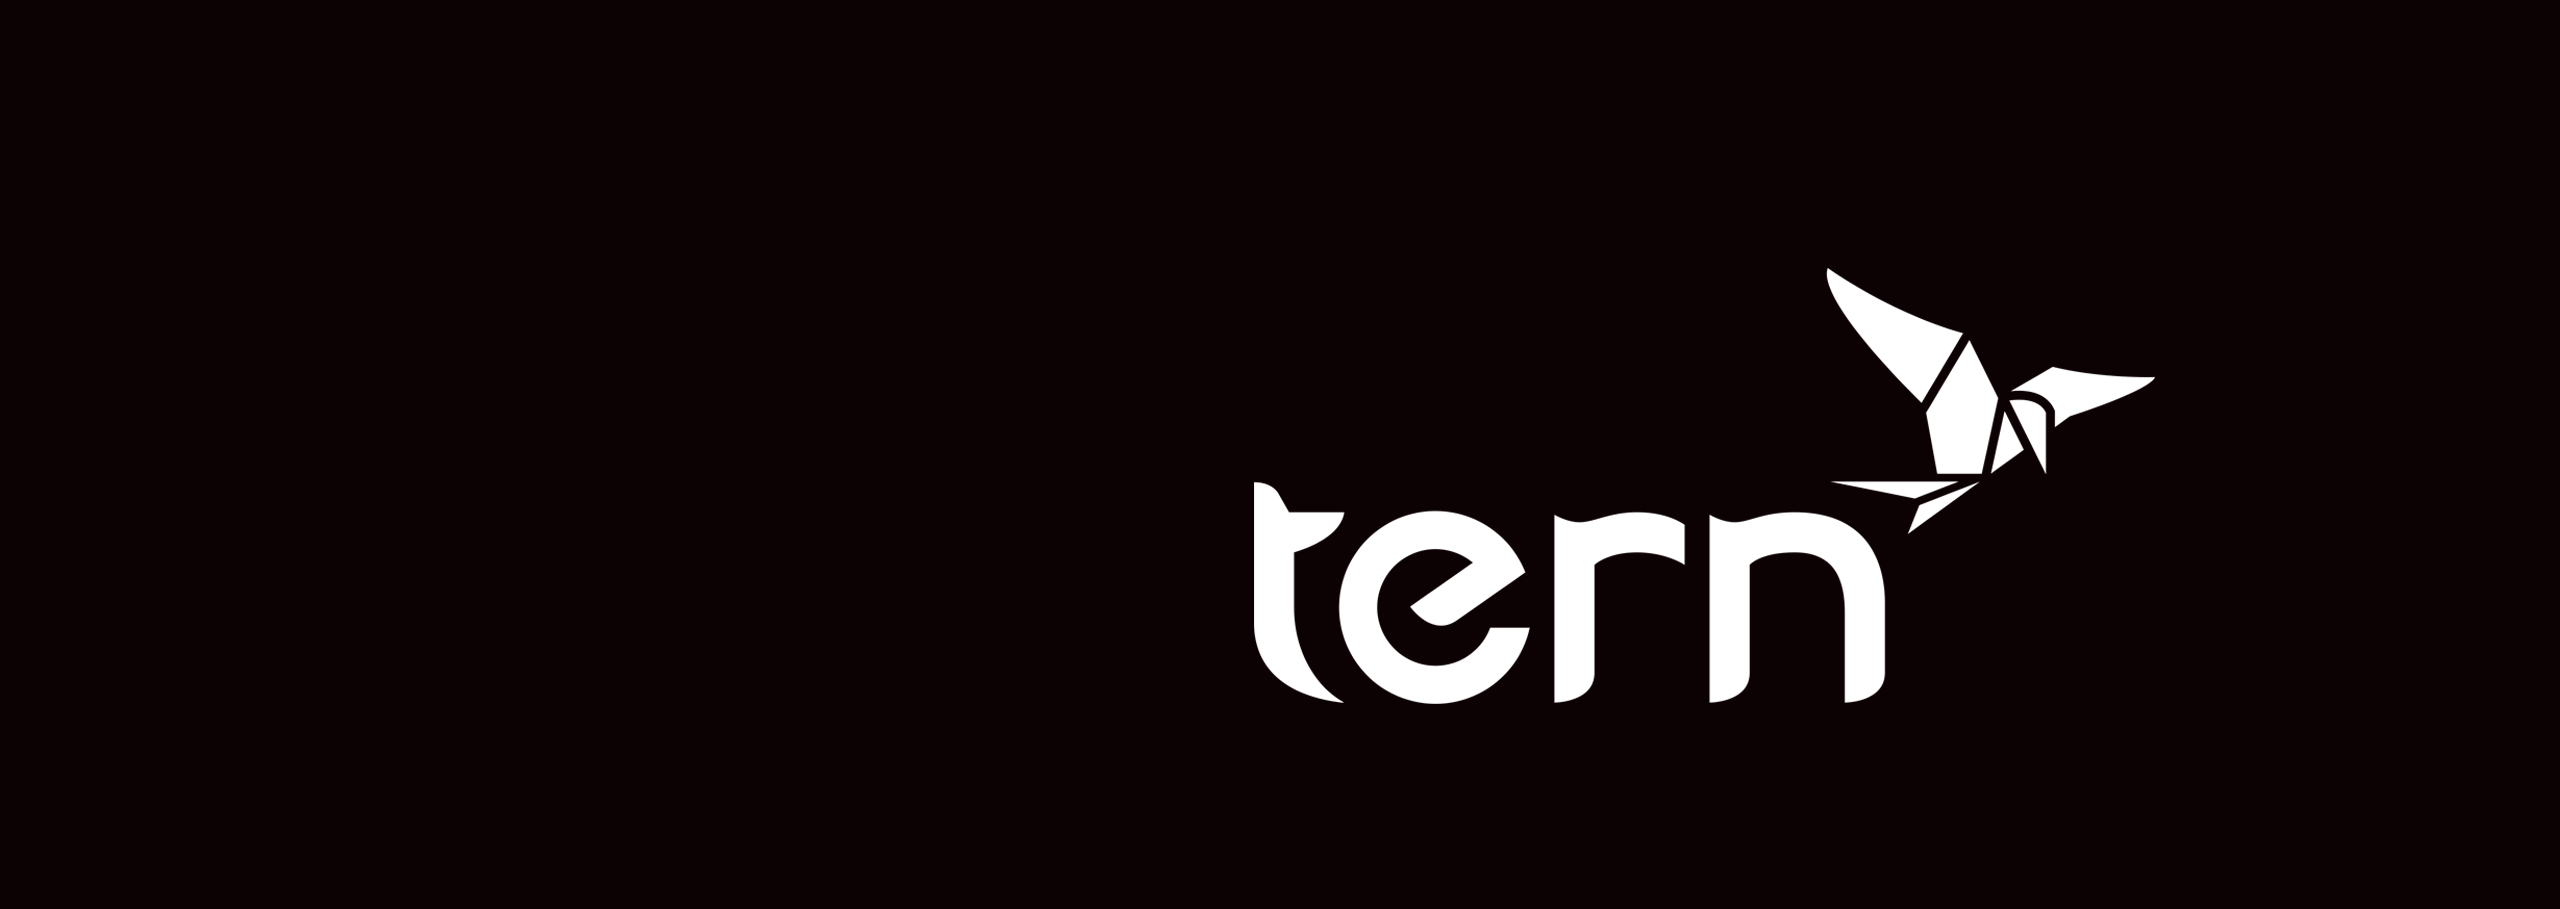 tern-banner